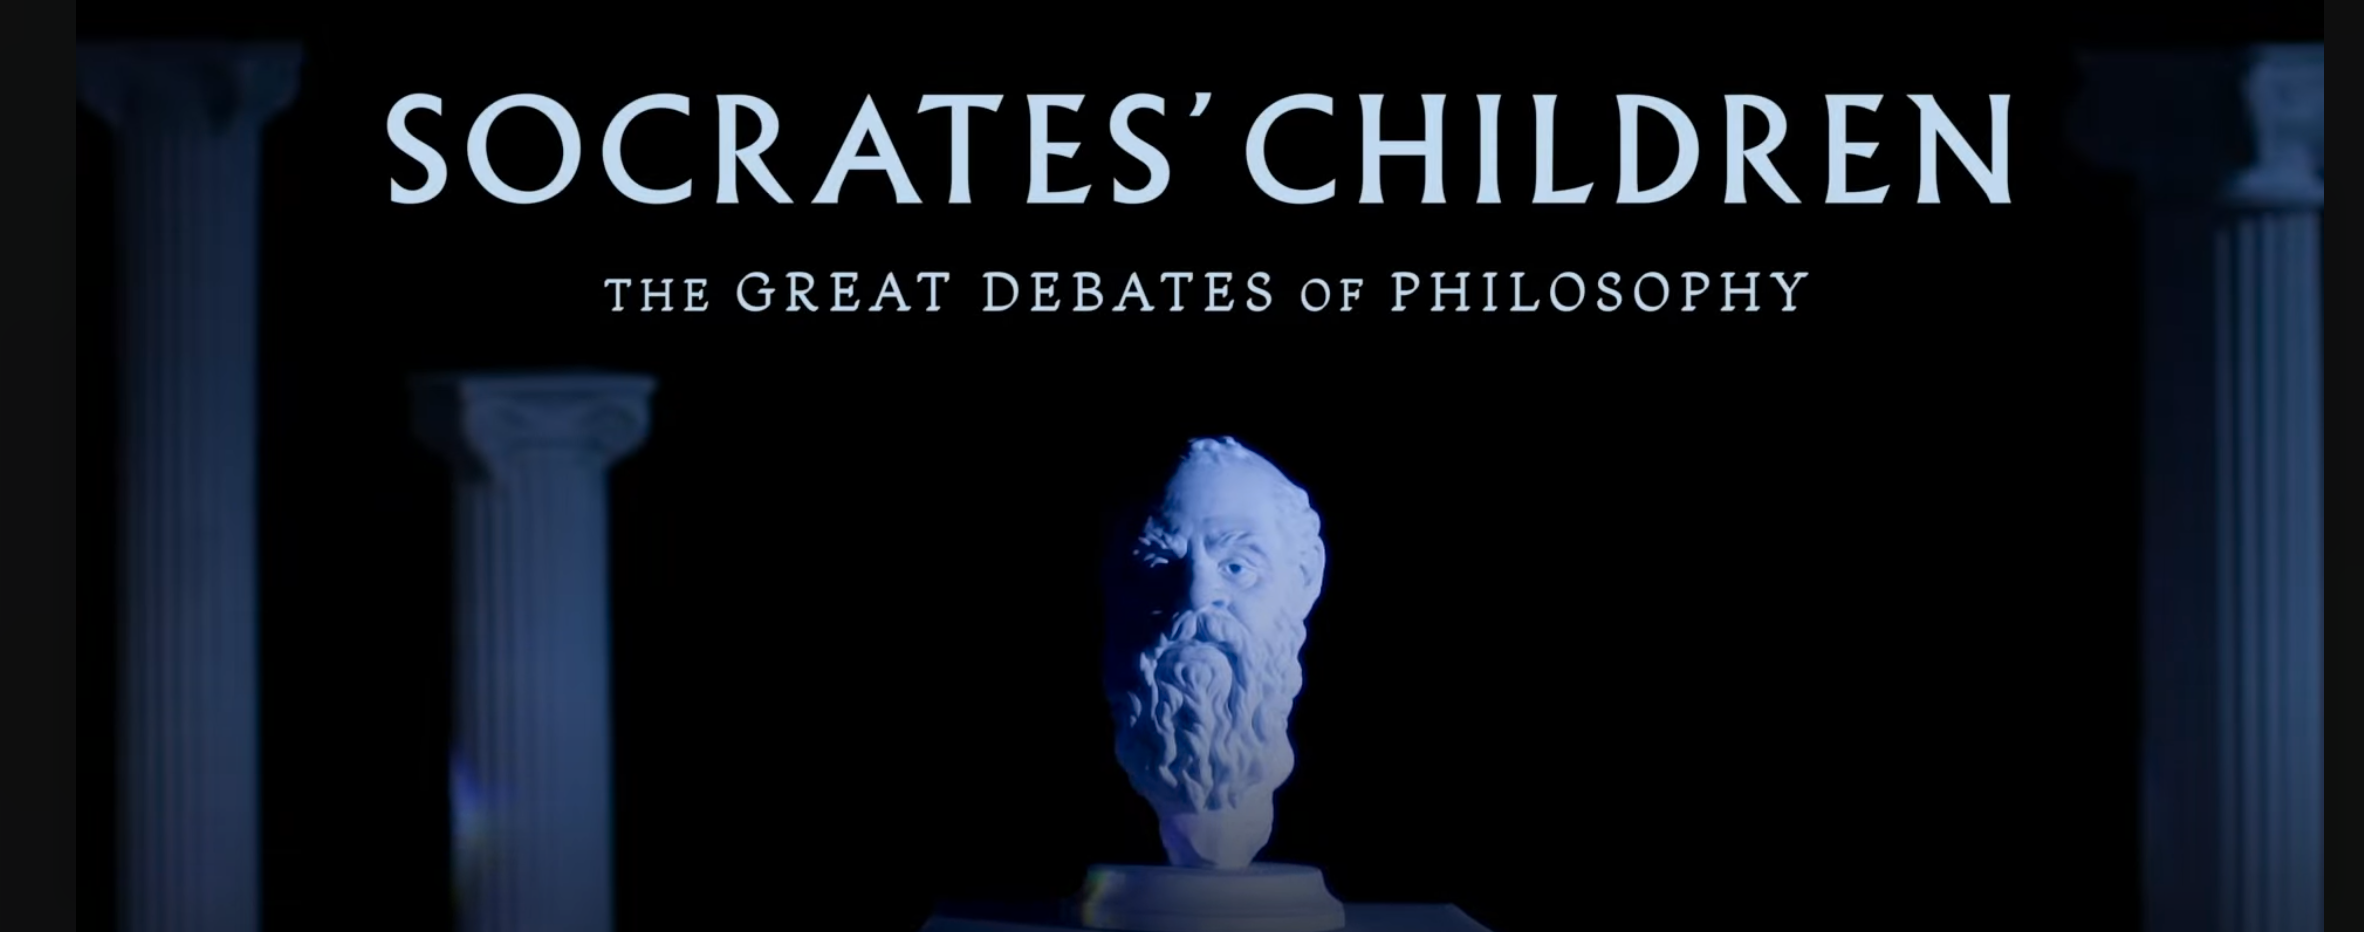 Great Debates of Philosophy